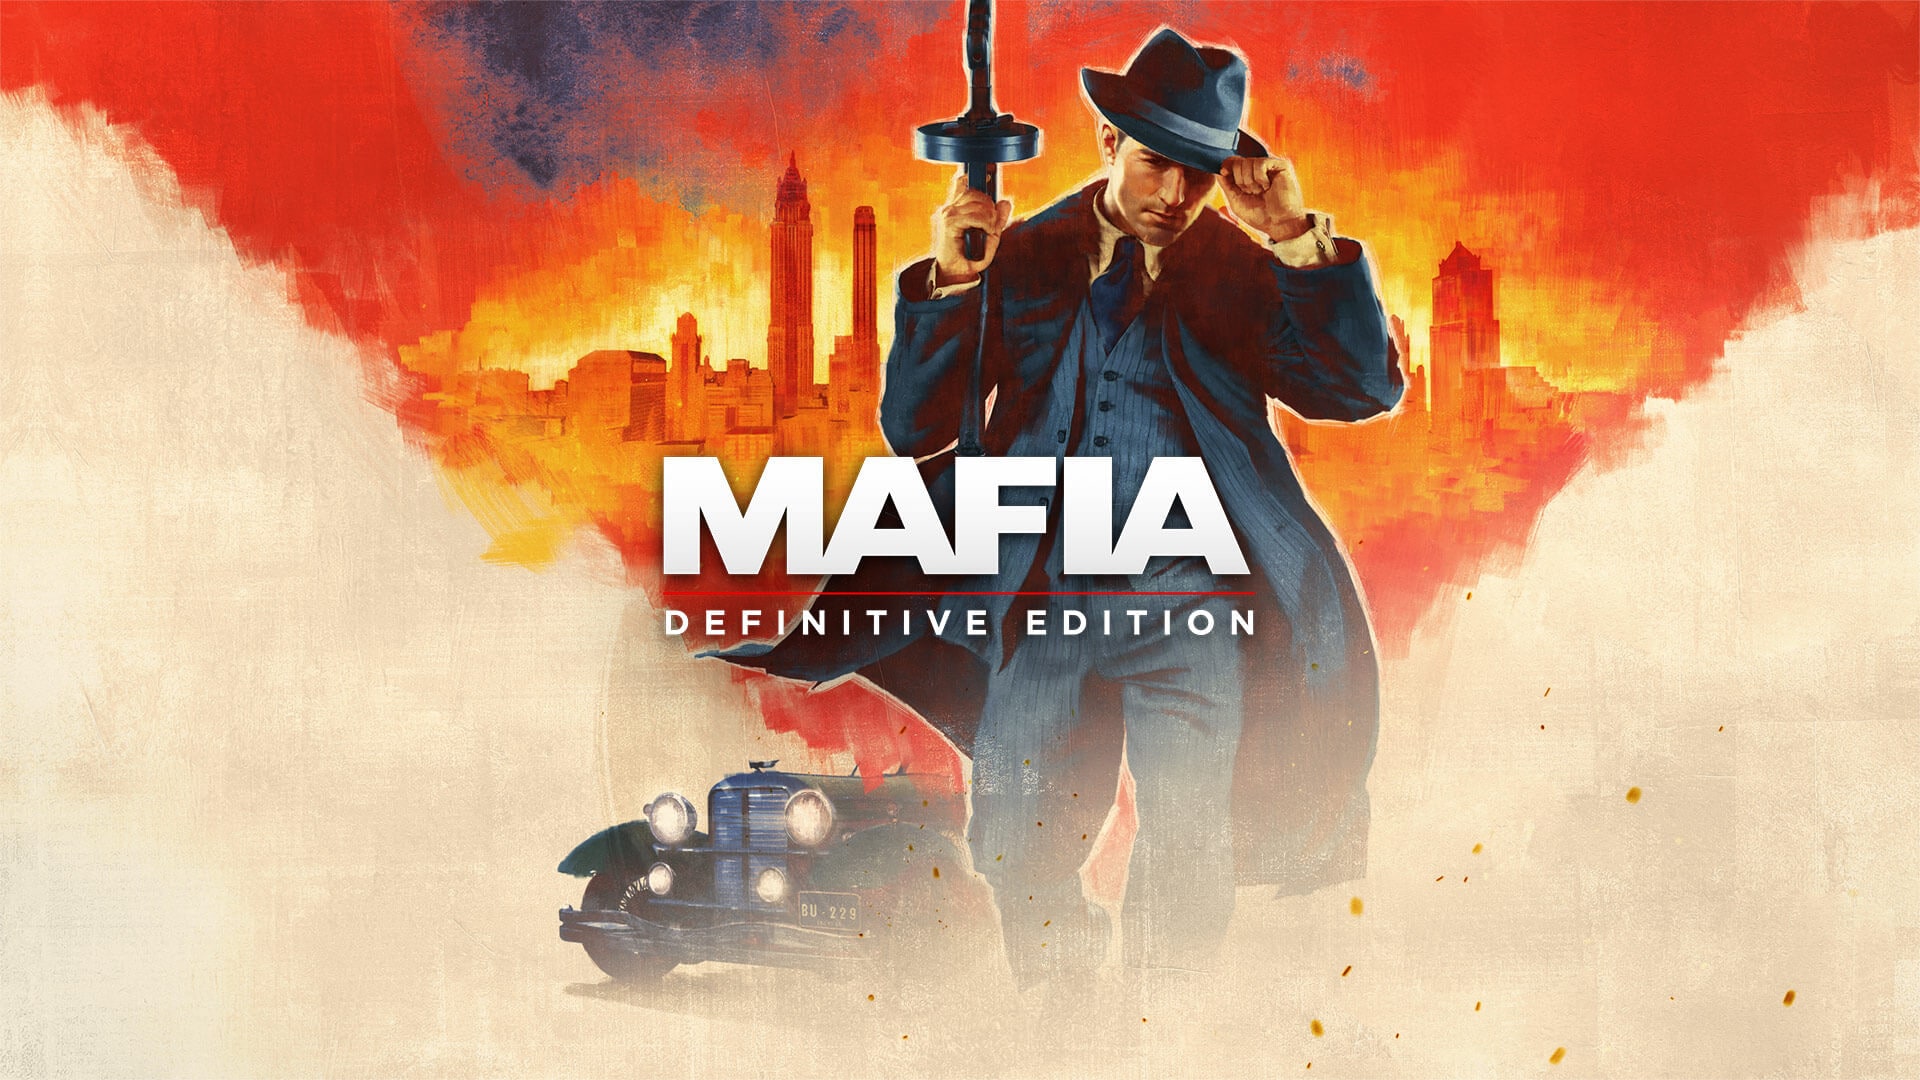 mafia ii definitive edition download free